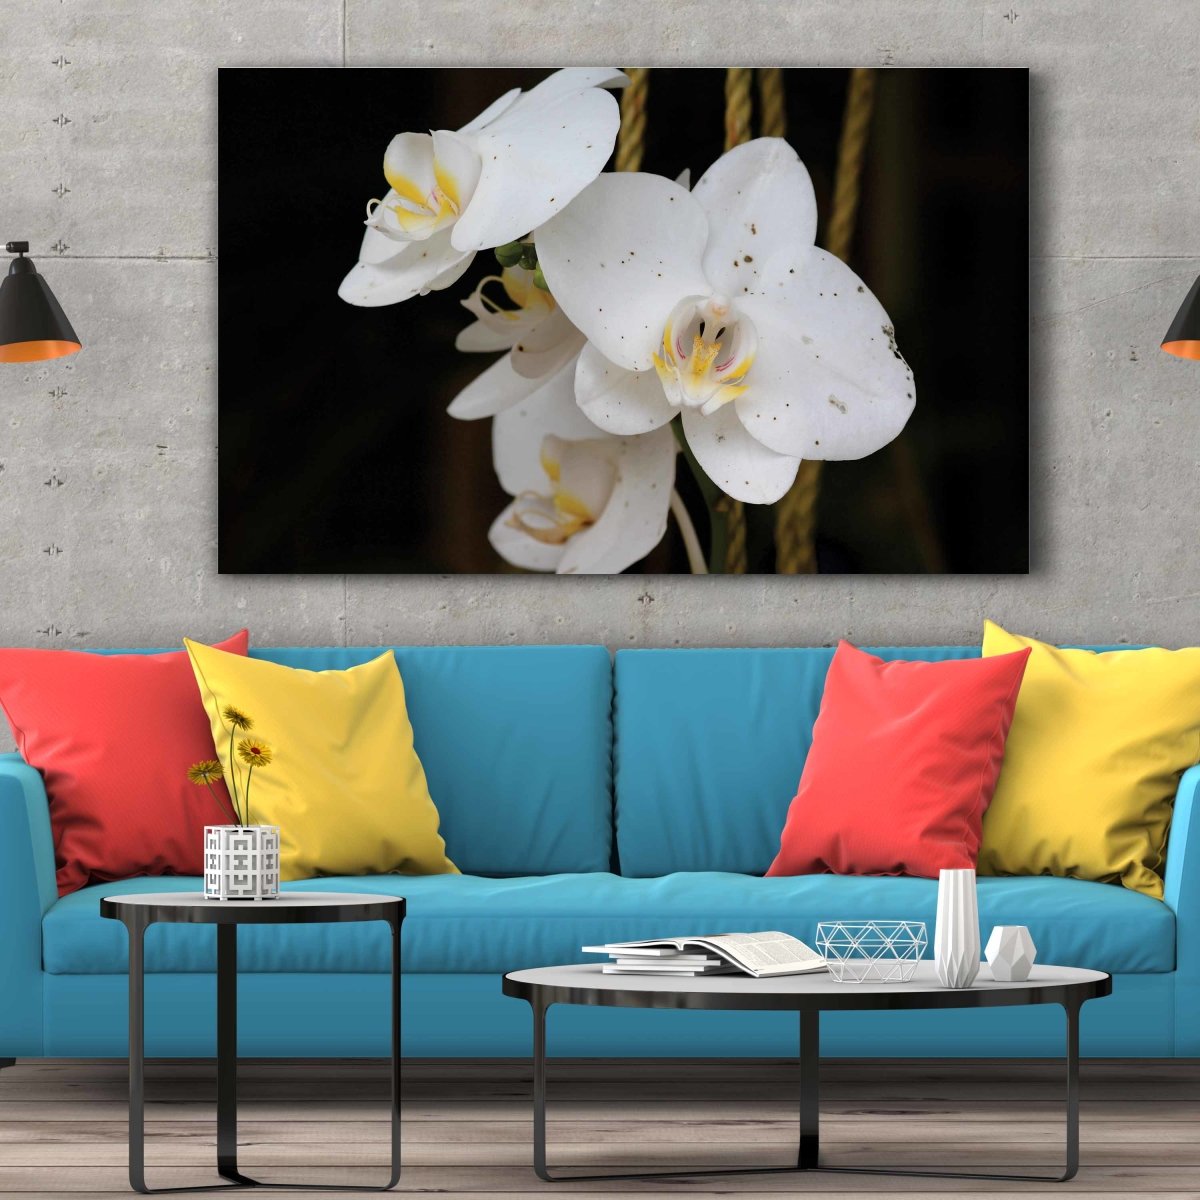 Tablou Canvas White Phalaenopsis Flower - clevny.ro